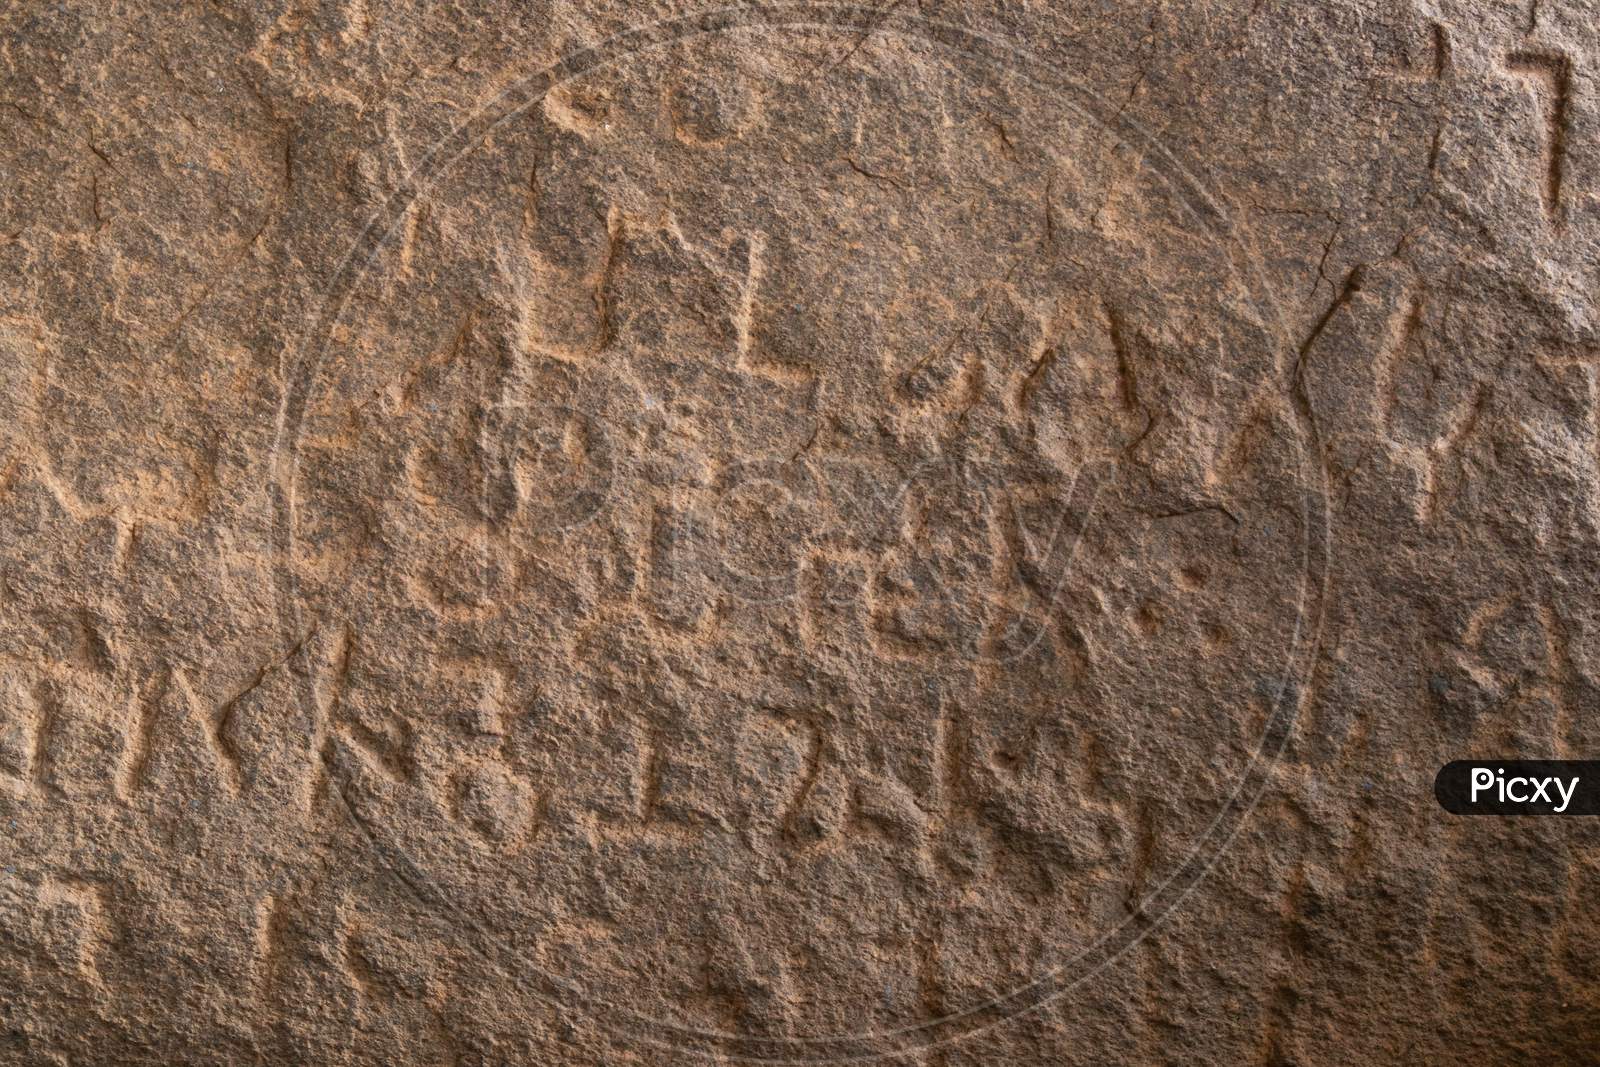 Close Up Of Inscriptions Of Emperor Ashoka On Rock Boulder At Maski, Raichur, India